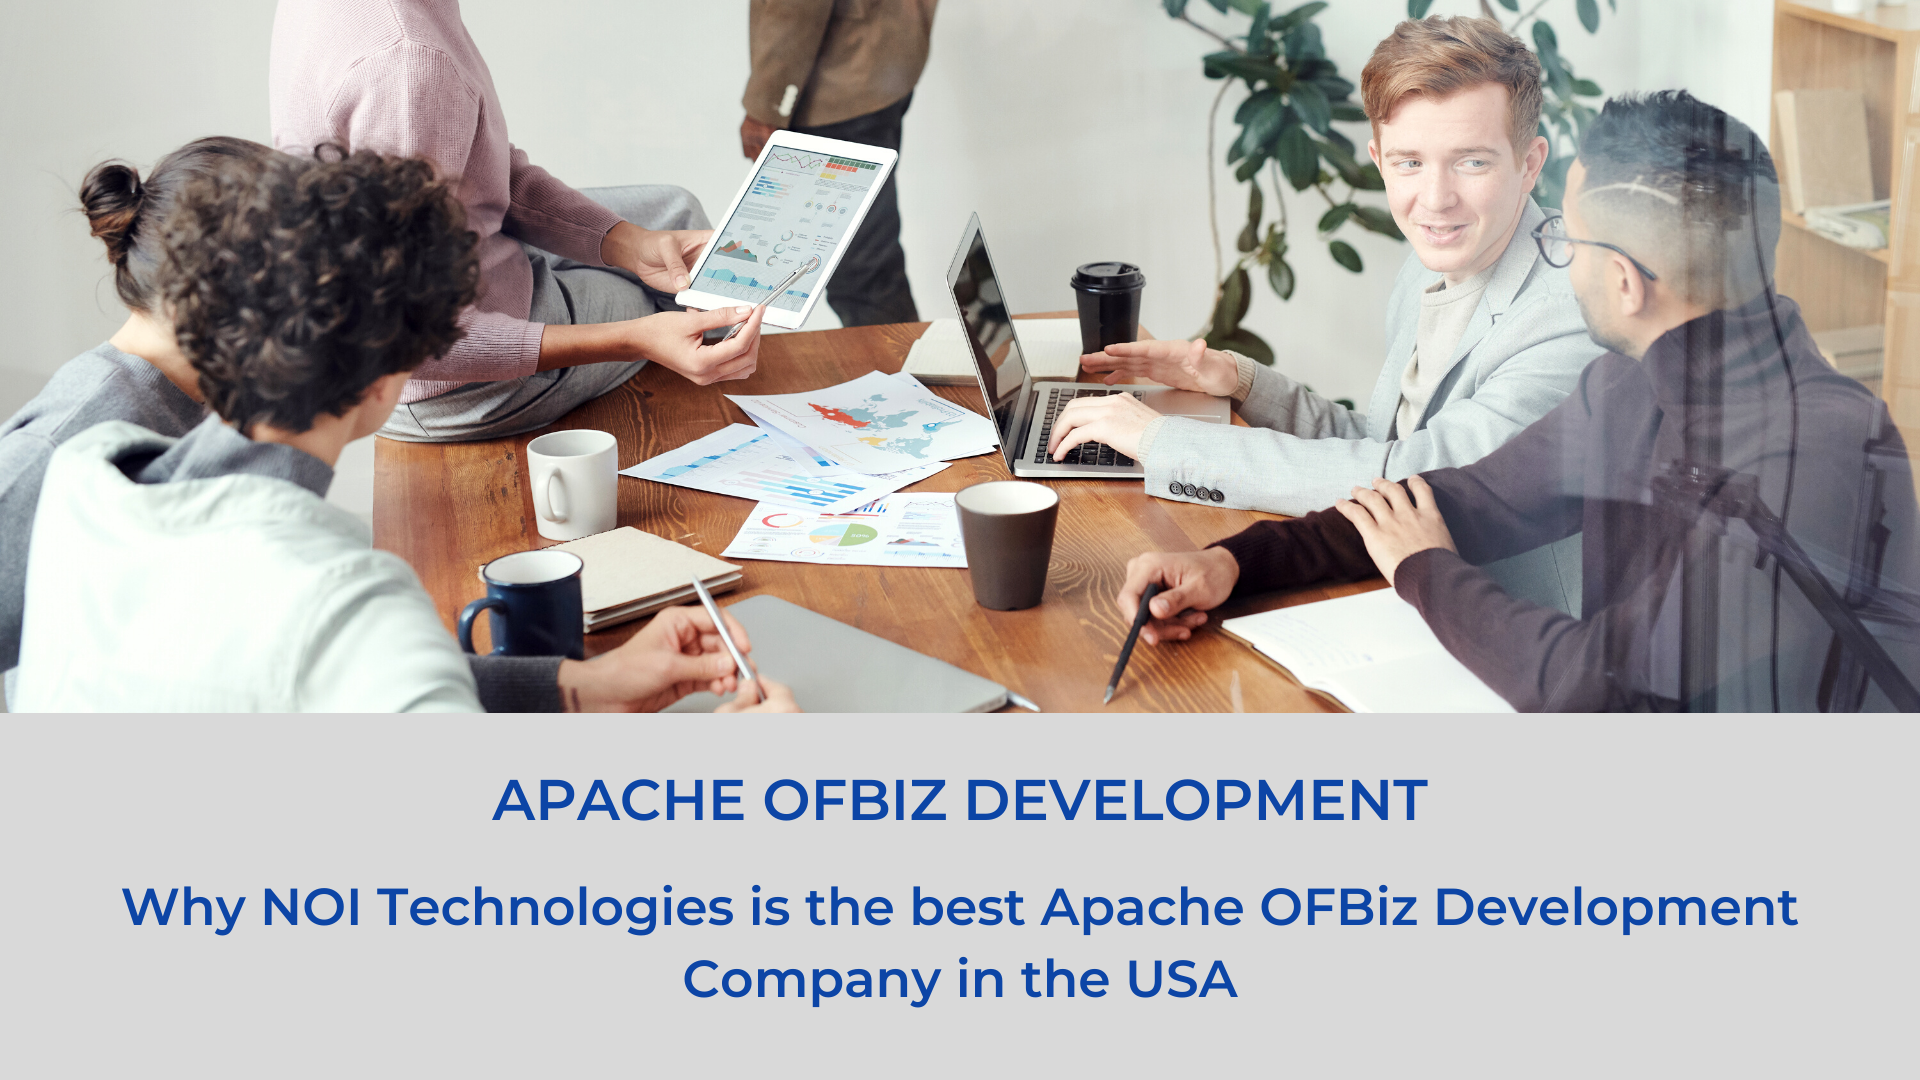 Apache OFBiz Development companny - NOI Technologies